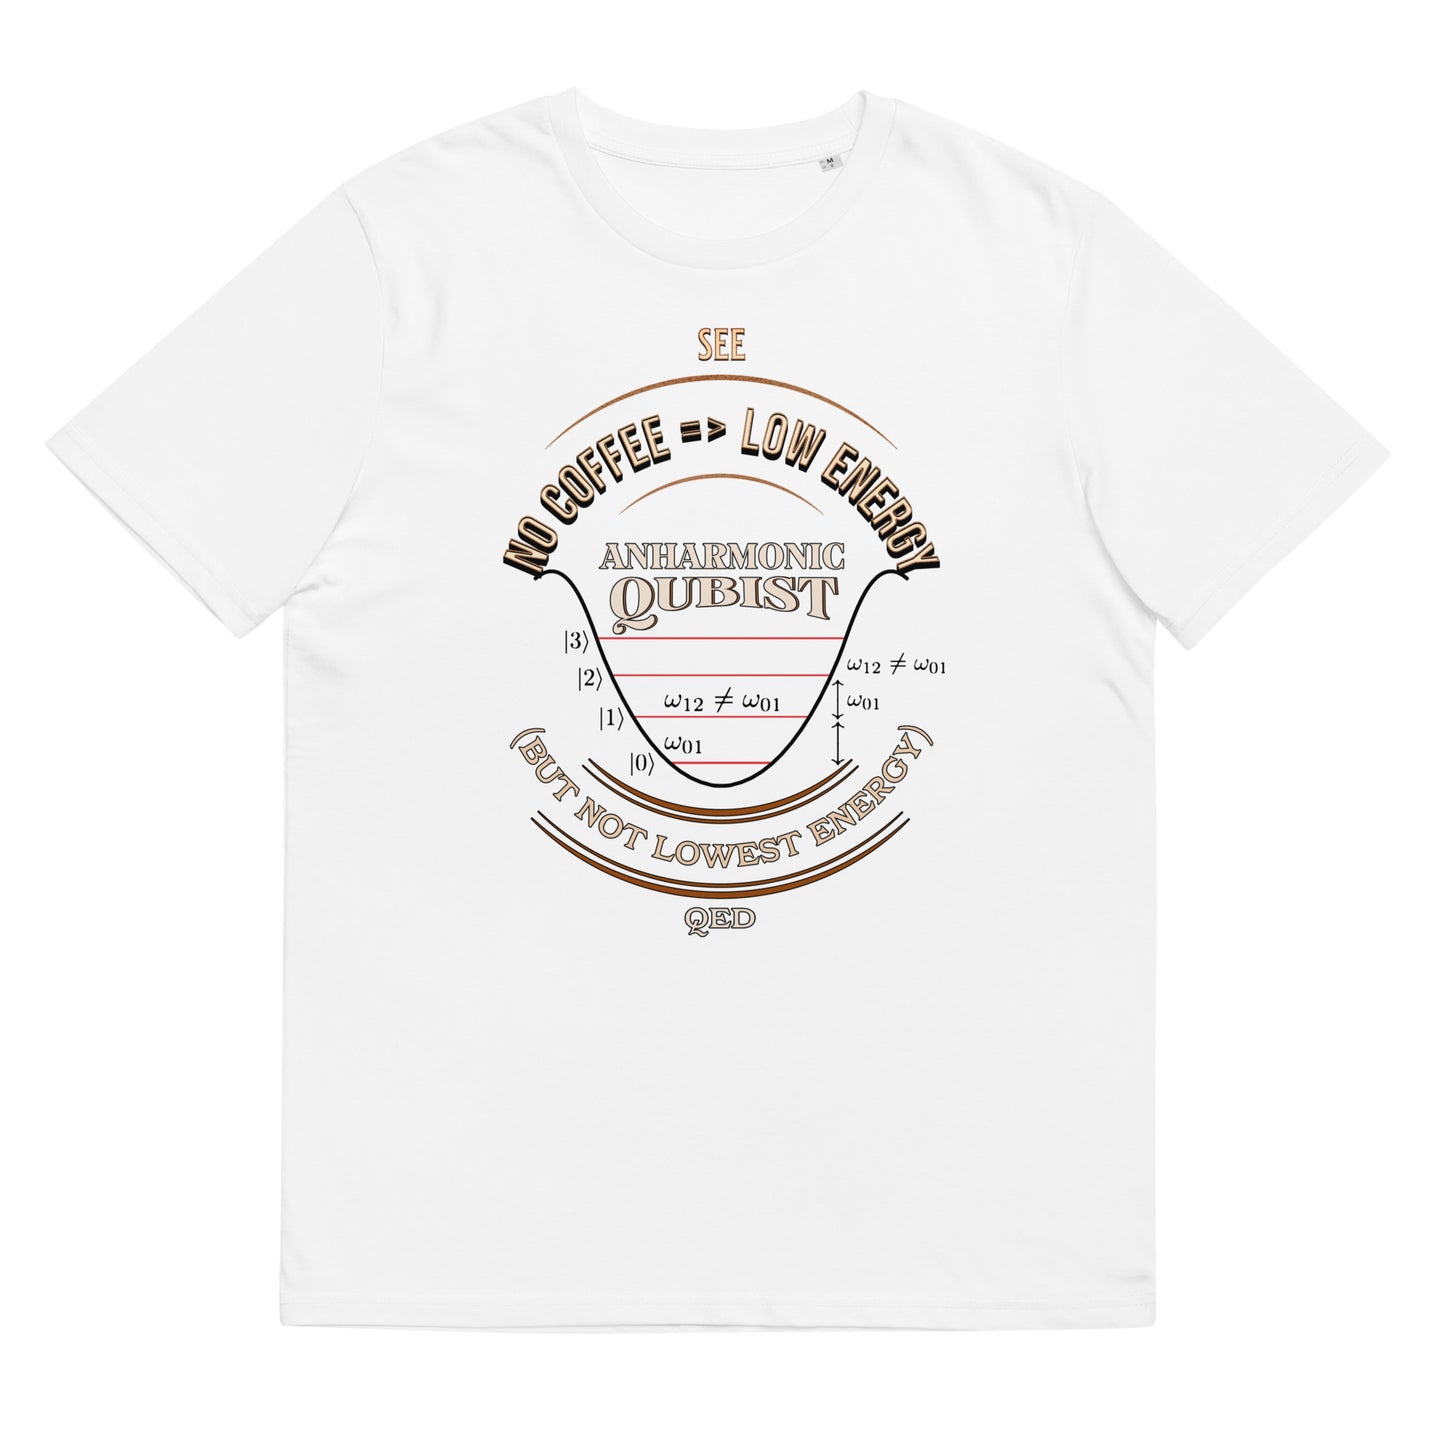 Unisex organic cotton t-shirt - Anharmonic Oscillations of a Lightly Caffeinated Qubist